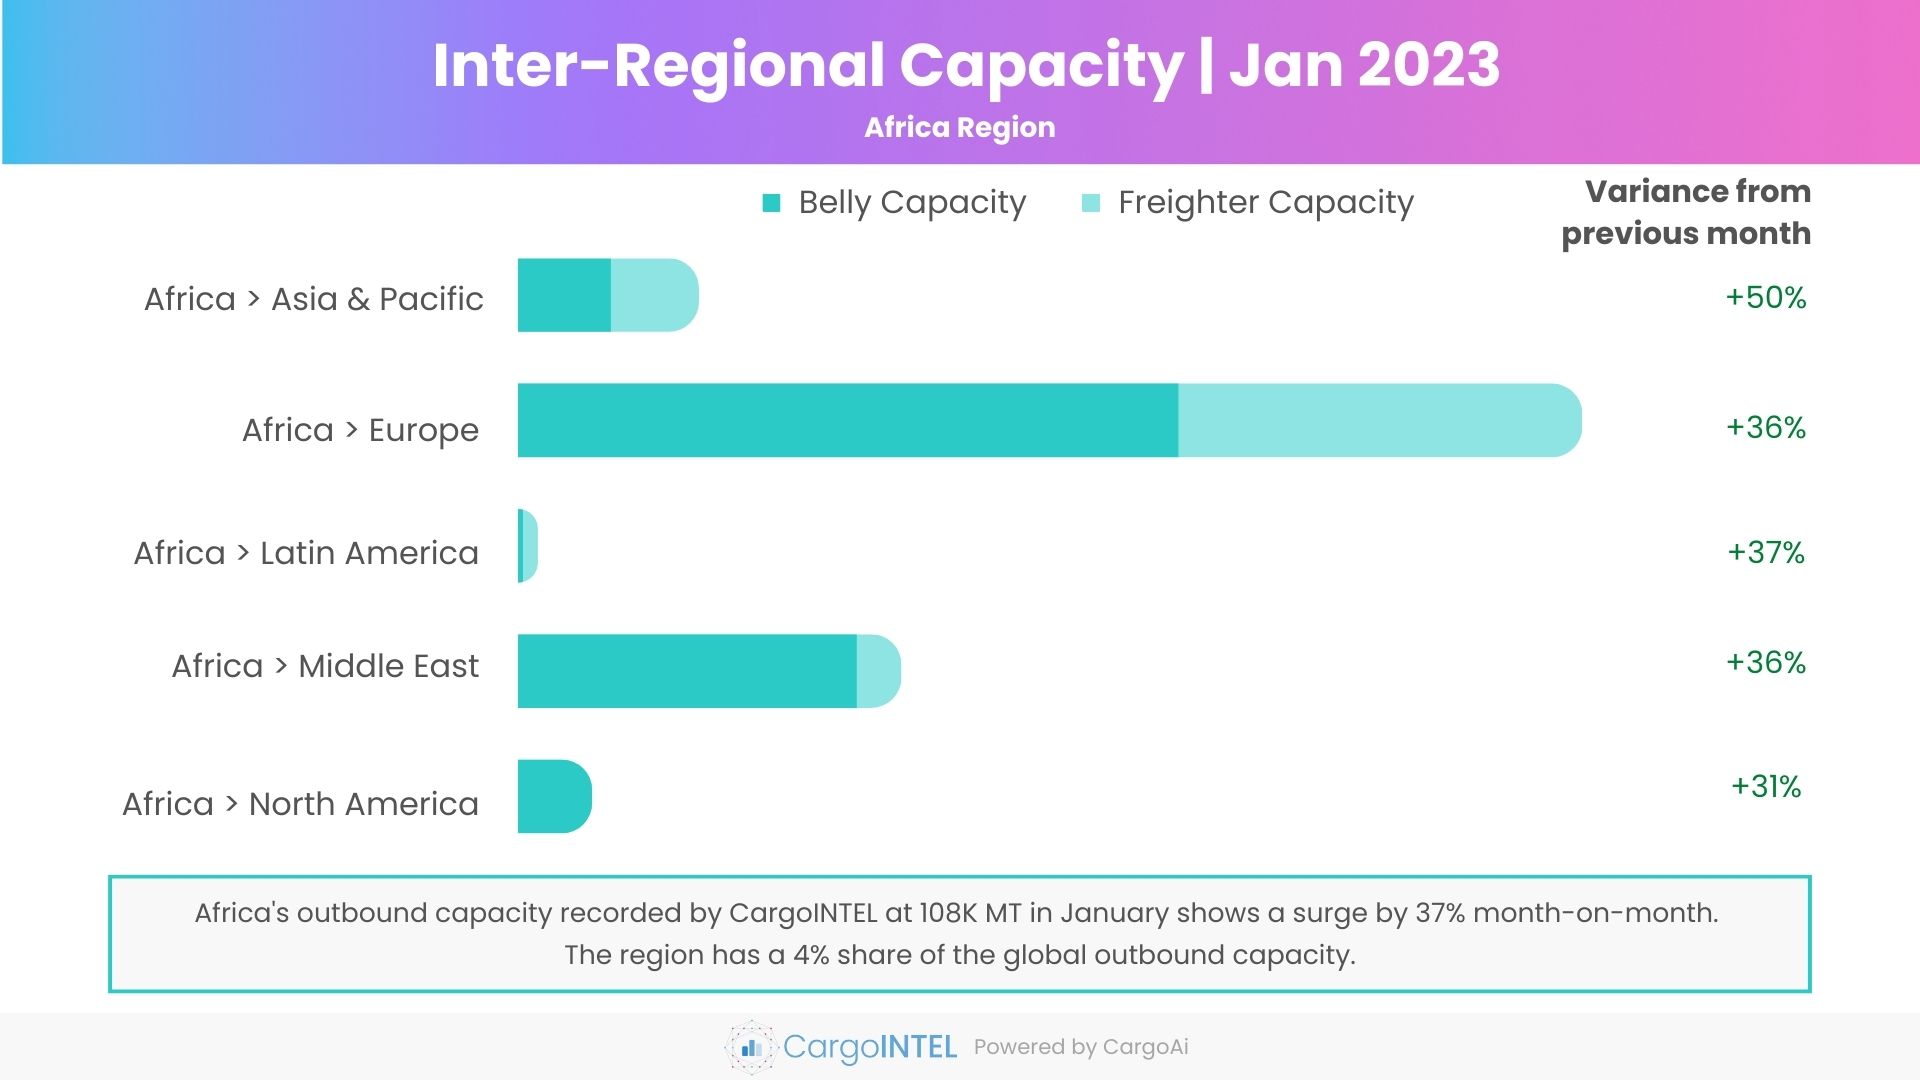 Air cargo capacity of Africa region of Jan 2023